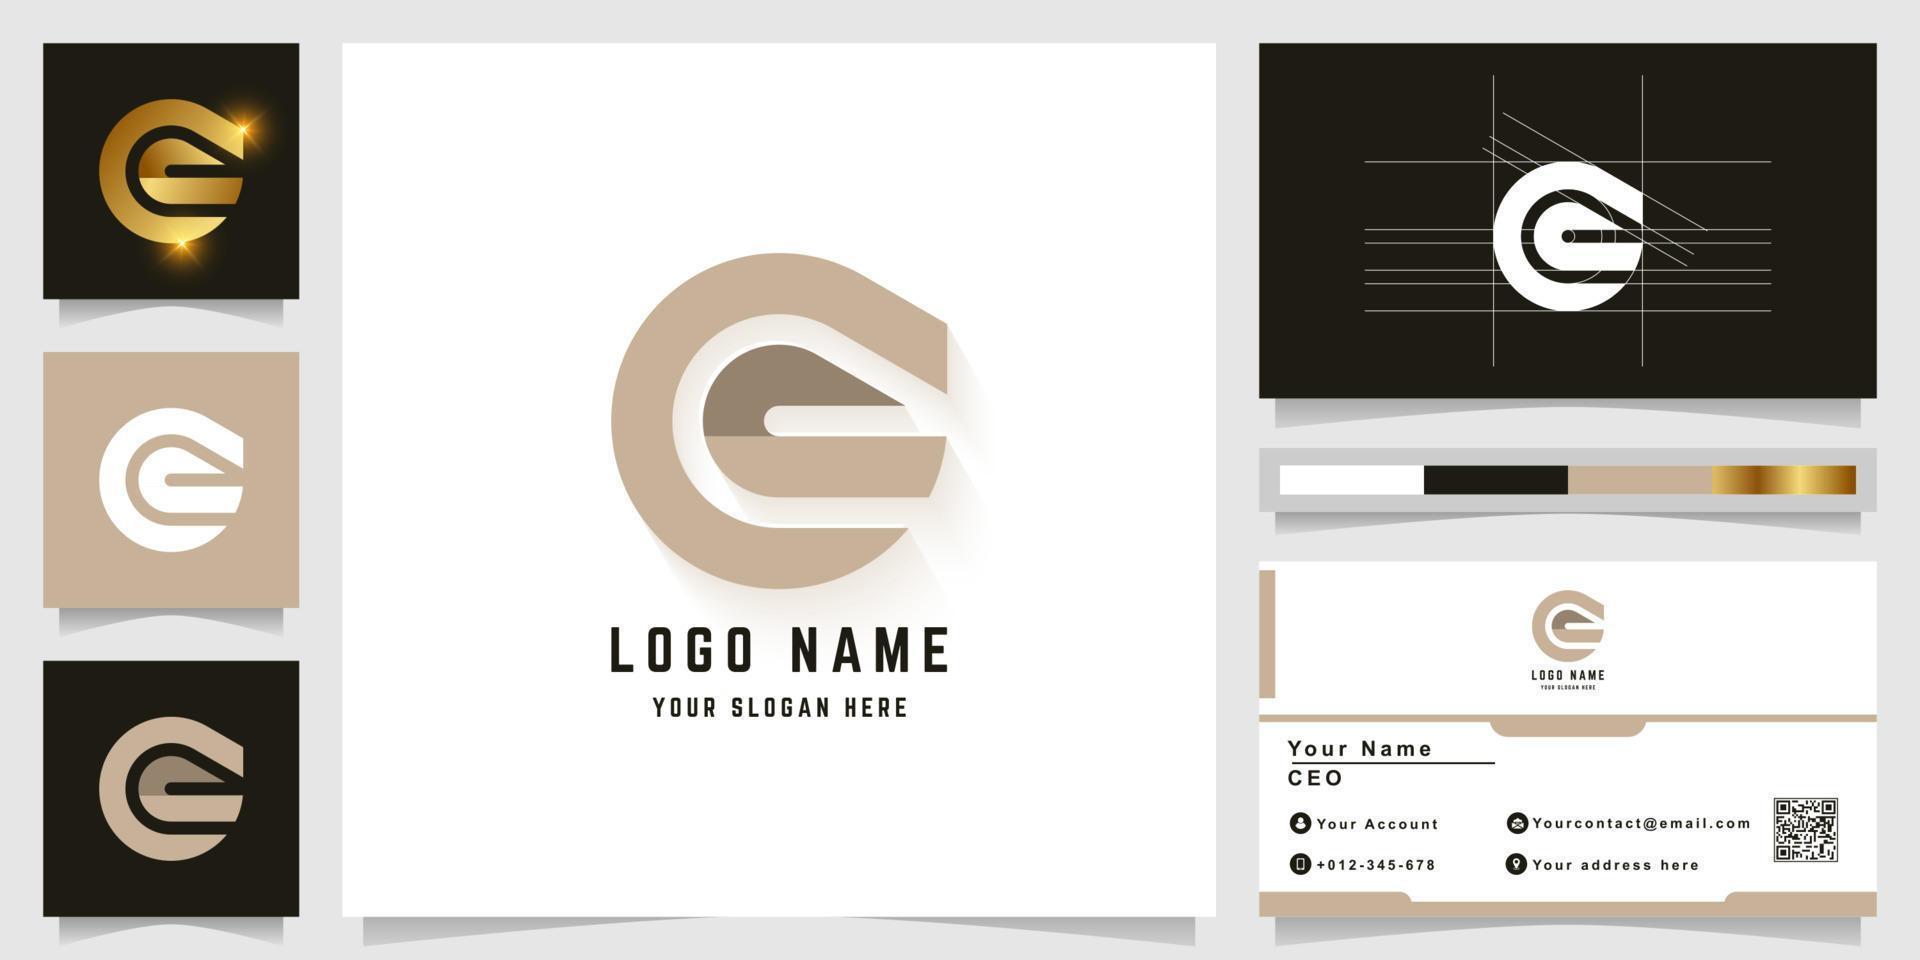 Letter C or G monogram logo with business card design vector